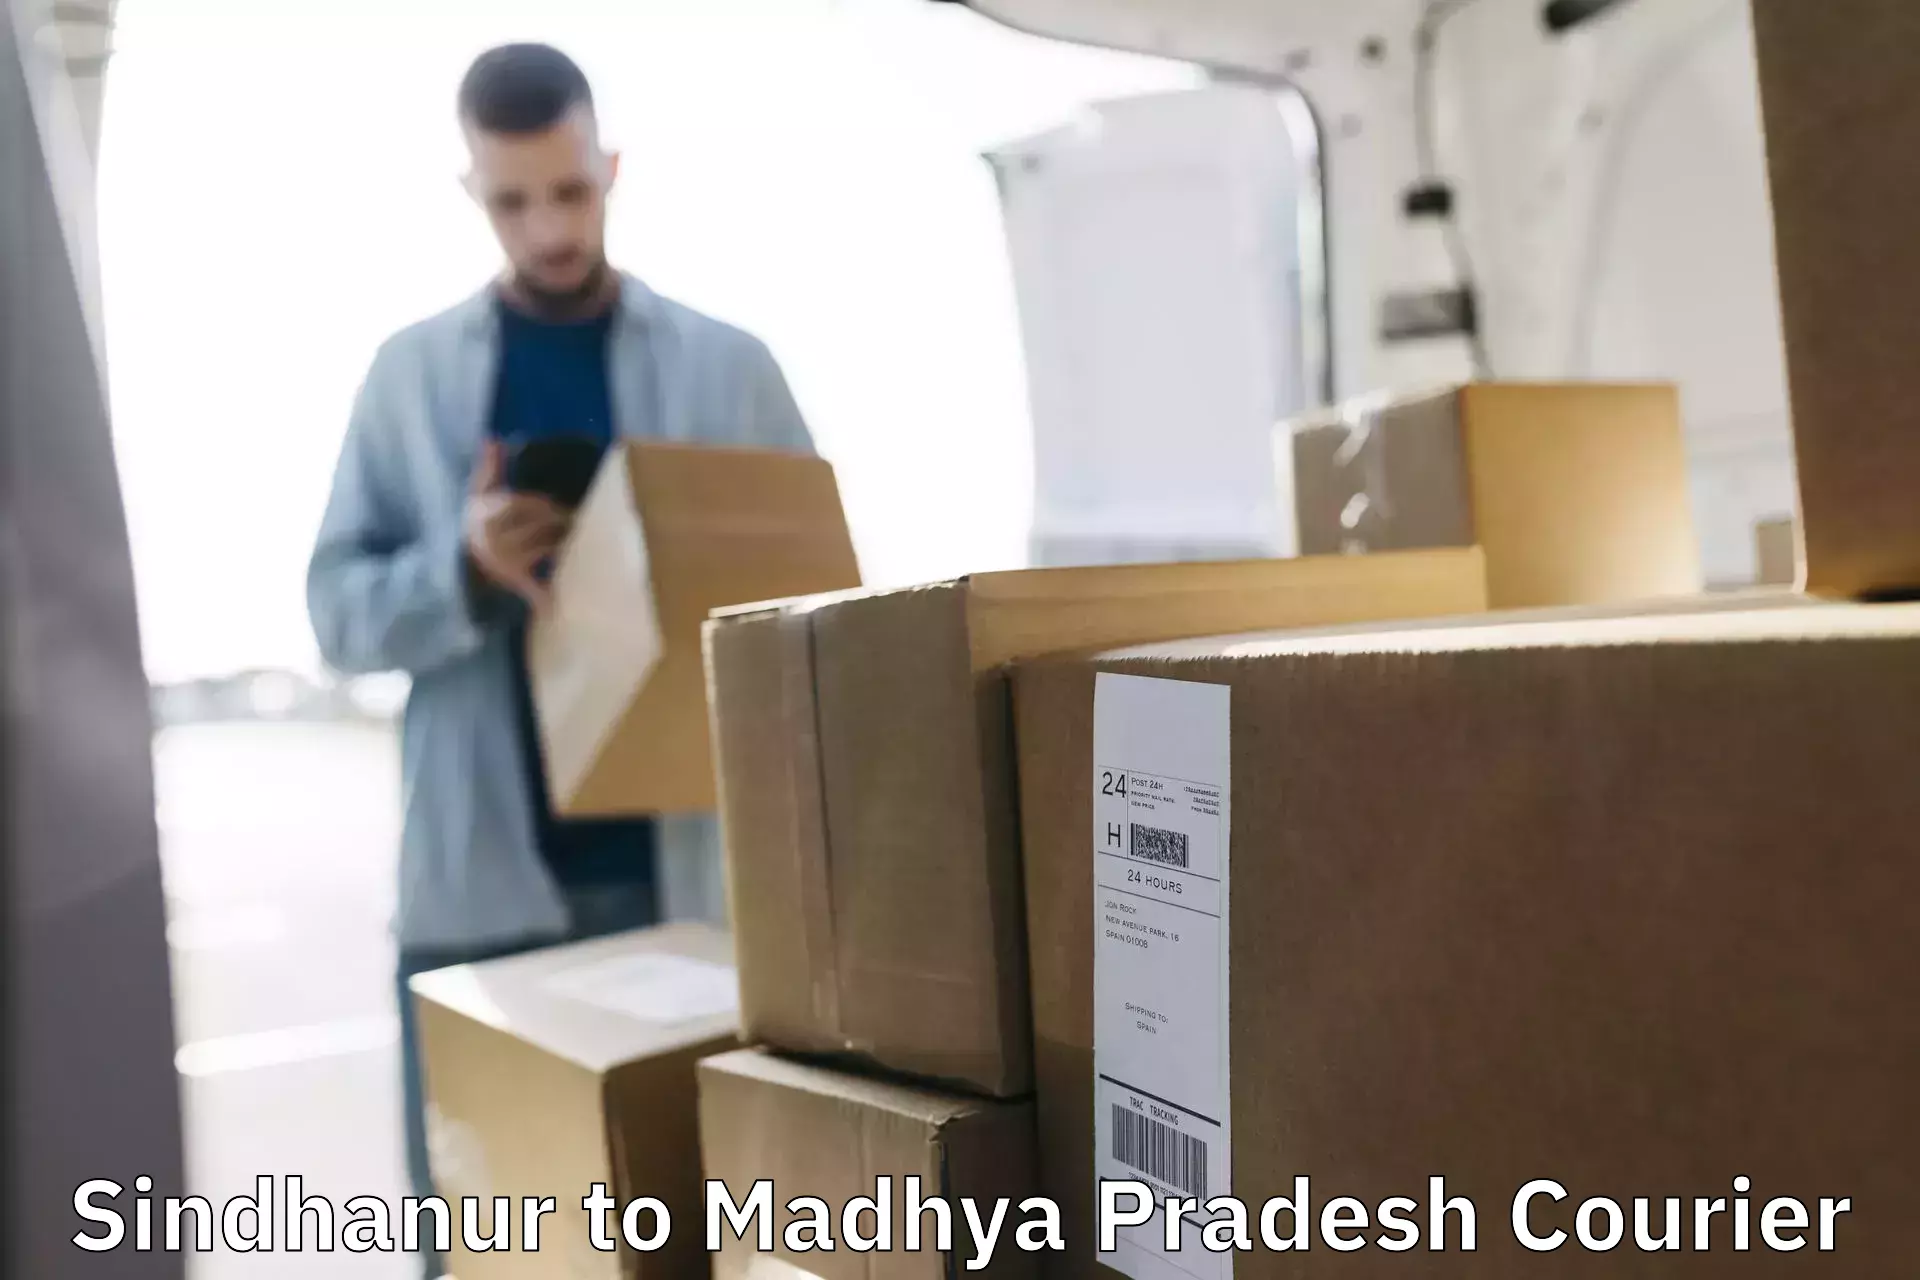 Professional courier handling Sindhanur to Chand Chaurai